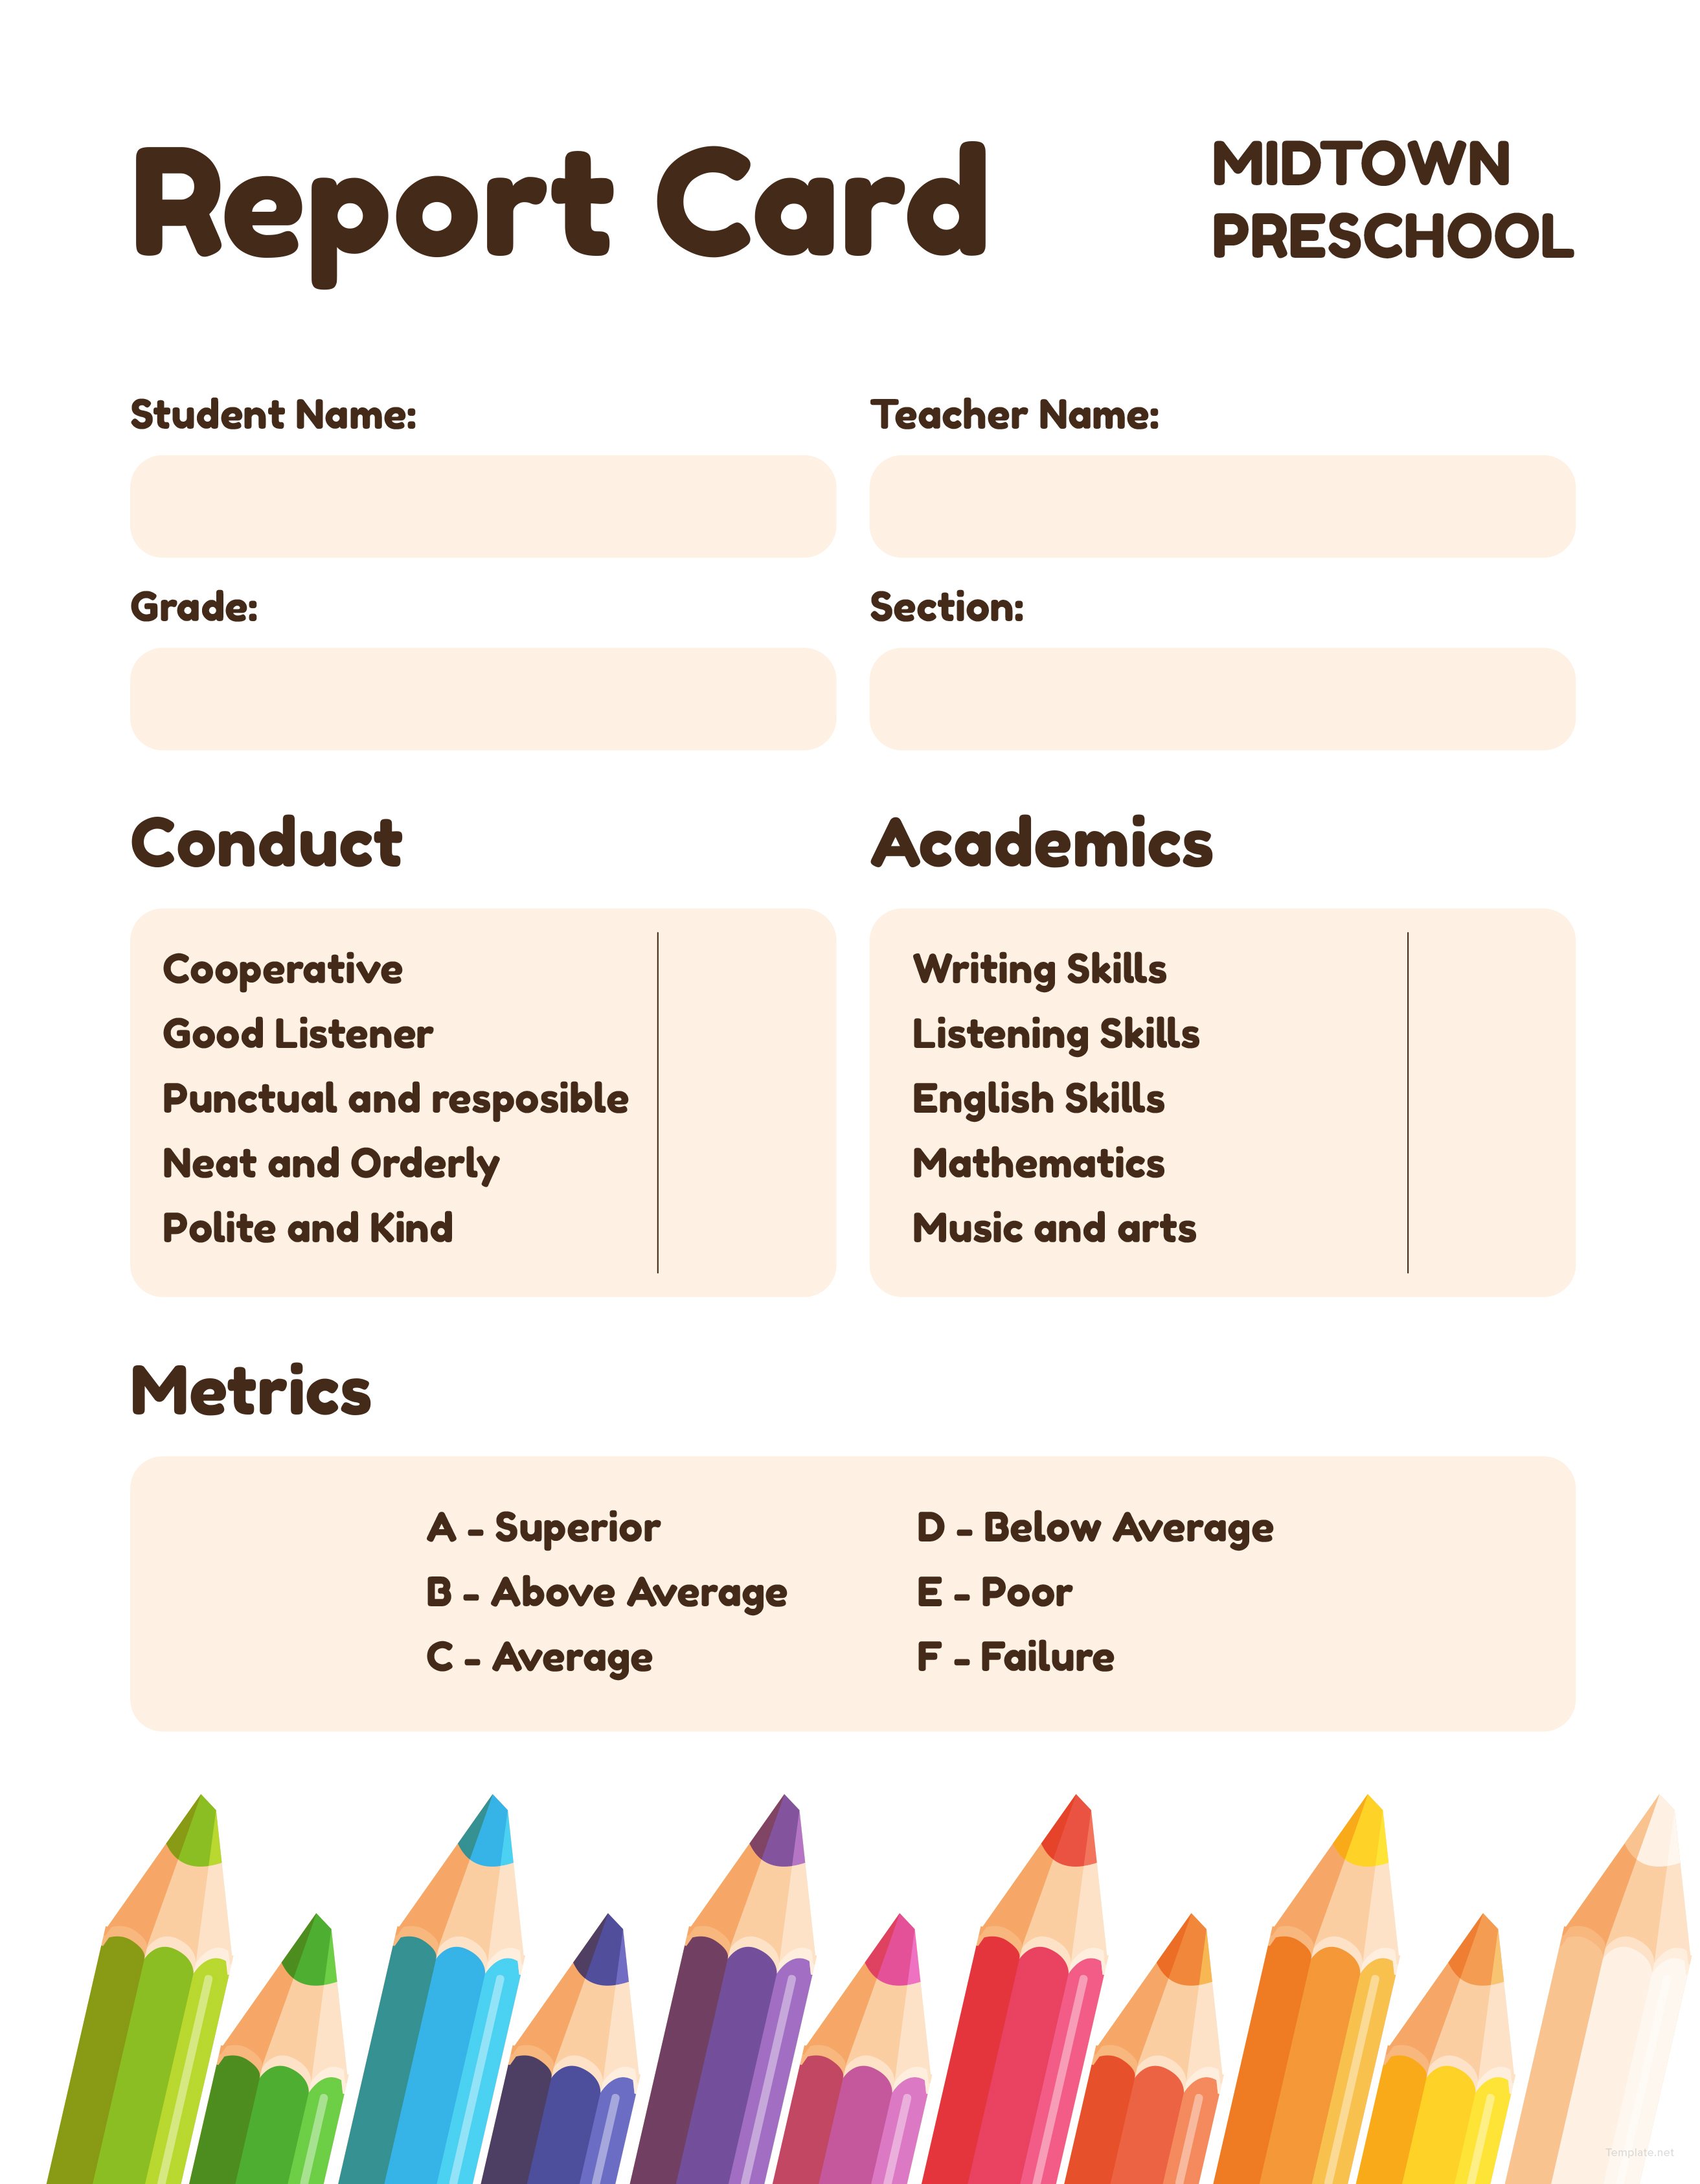 Free Preschool Report Card Template in Microsoft Word, Microsoft